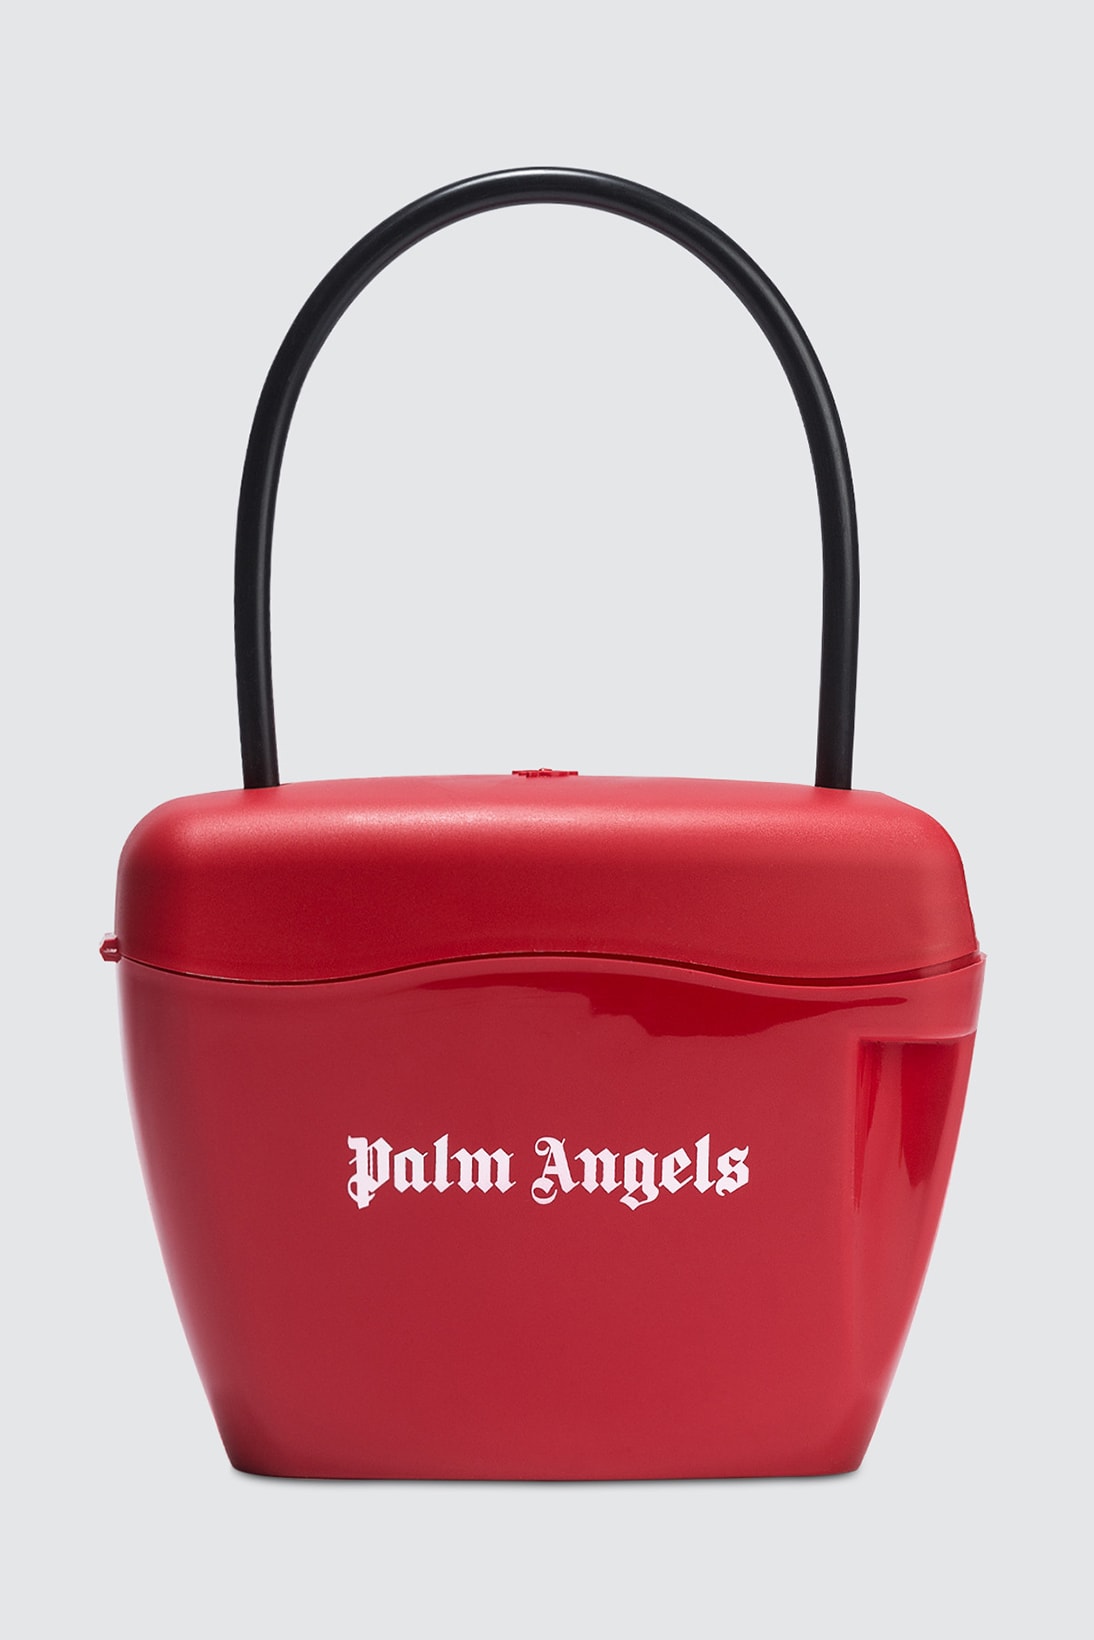 Palm Angels Plastic Padlock Bag Red Black White Yellow Blue Green Orange Handbag